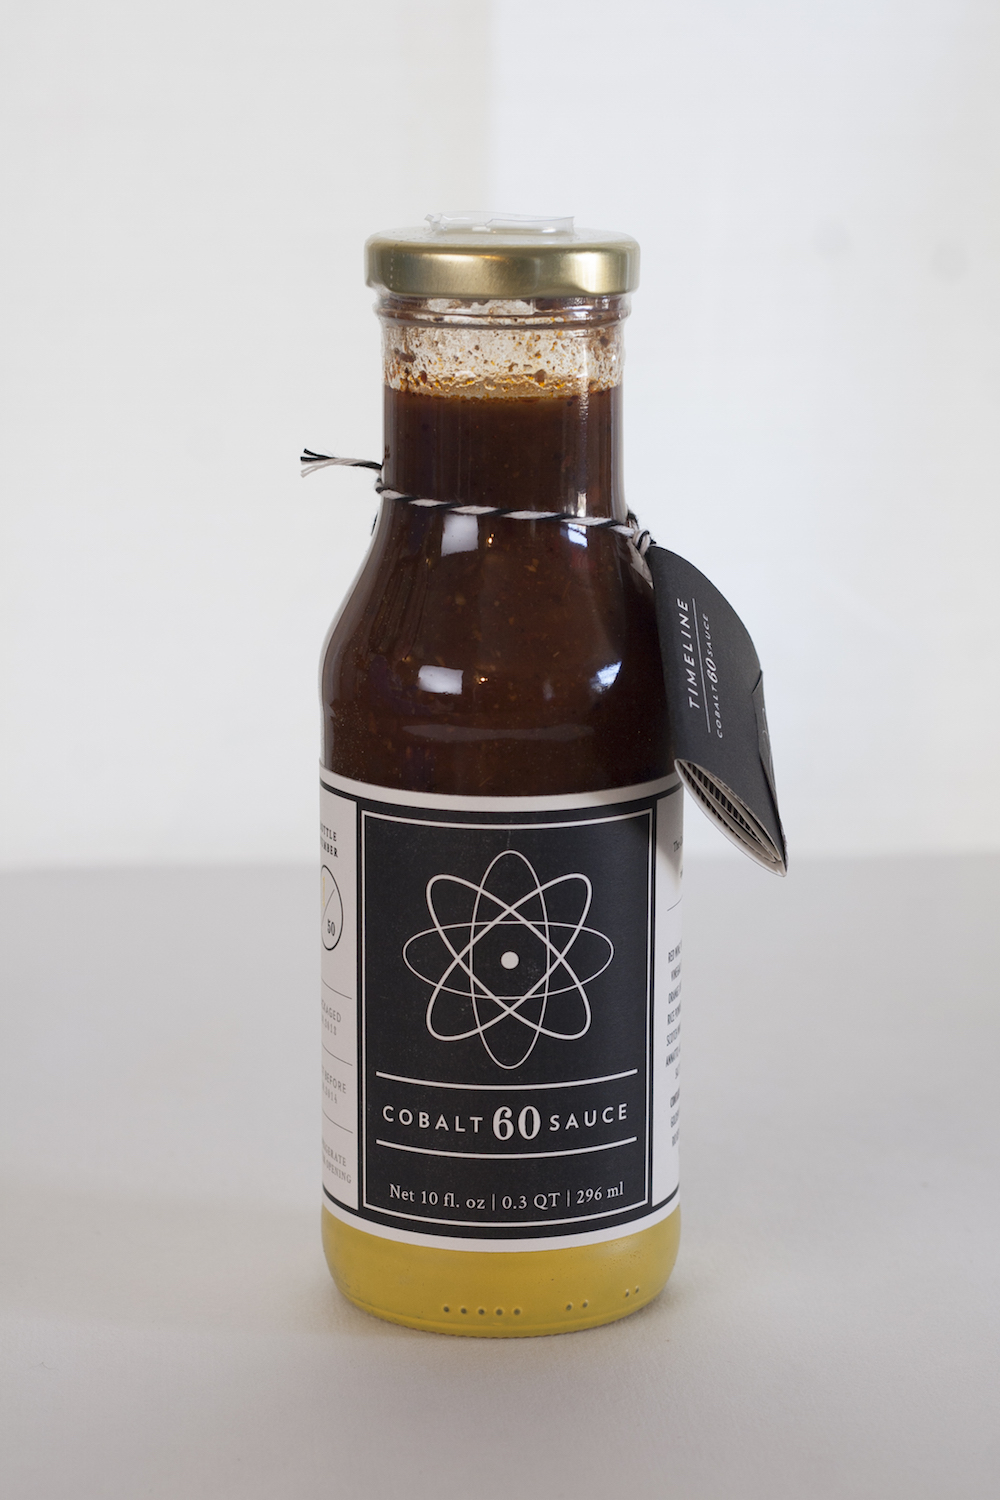 Genomic-Gastronomy-Cobalt-60-bottle